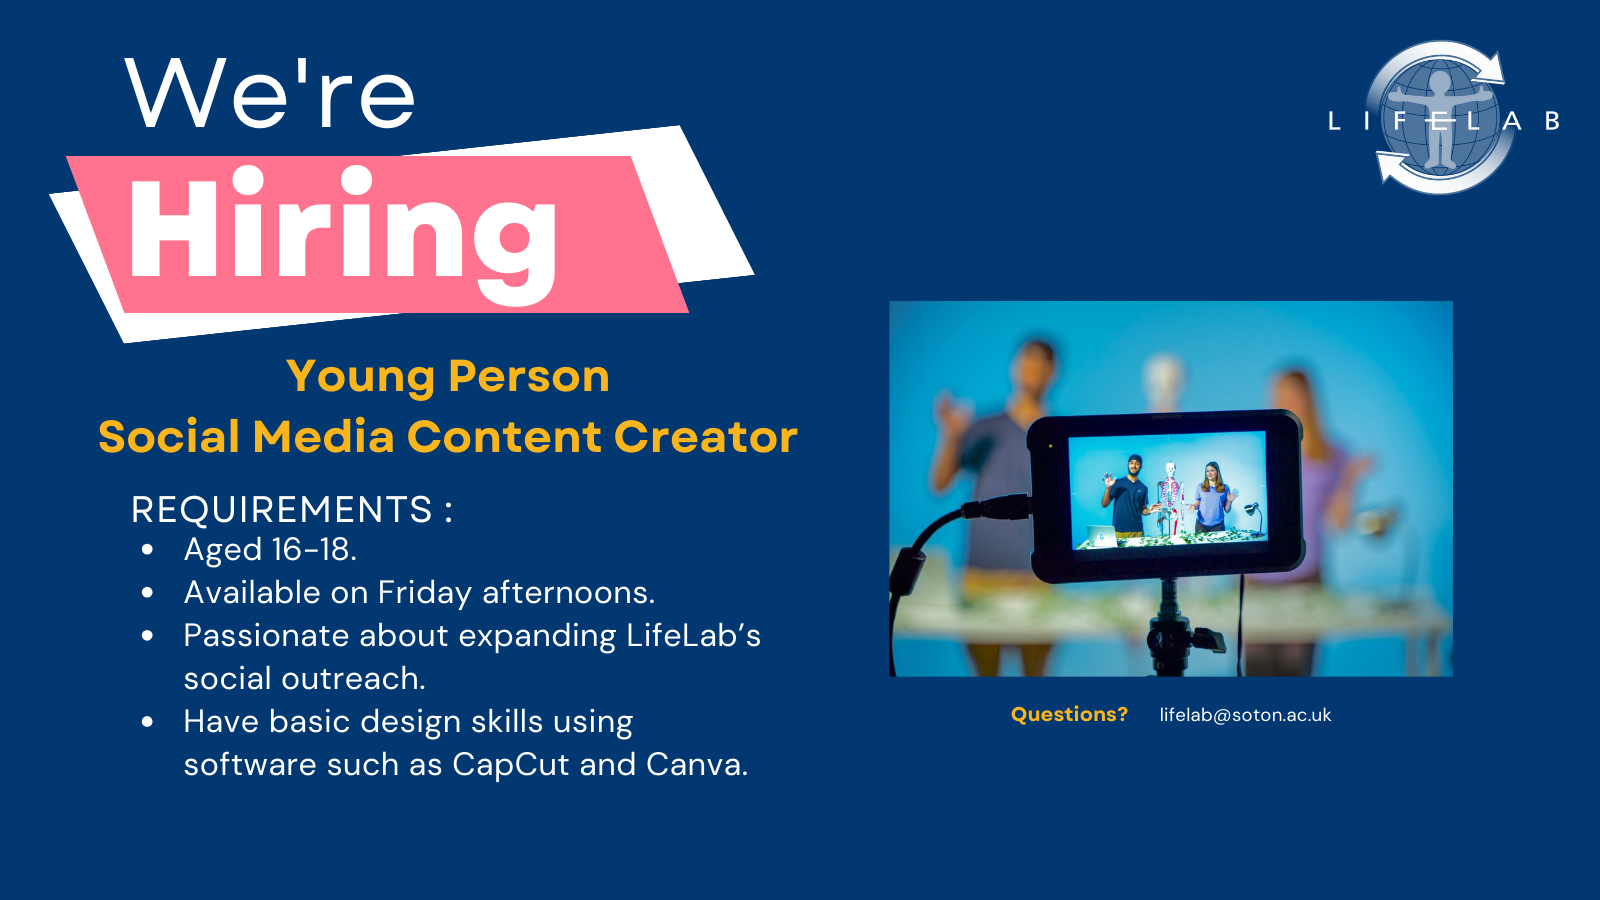 We're hiring - Young Person Social Media Content Creator